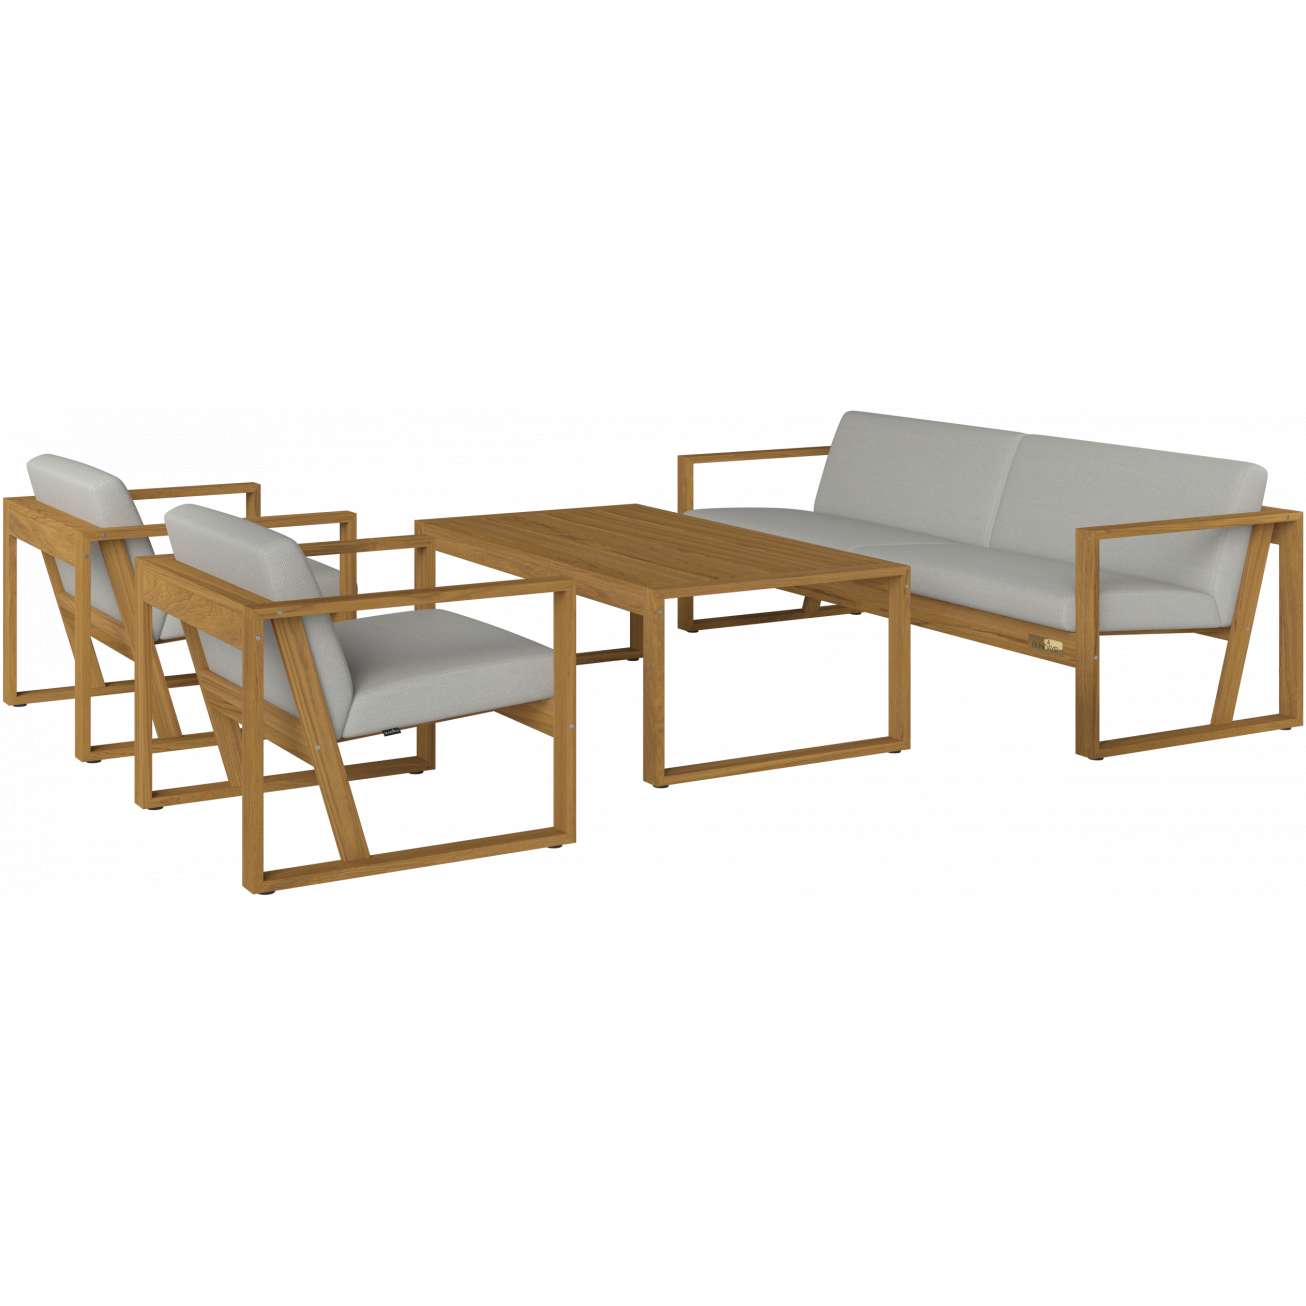 Core hagsofagruppe med stoler og bord fra Sundays Design utemøbler - får du hos Fine Design Hagemøbler